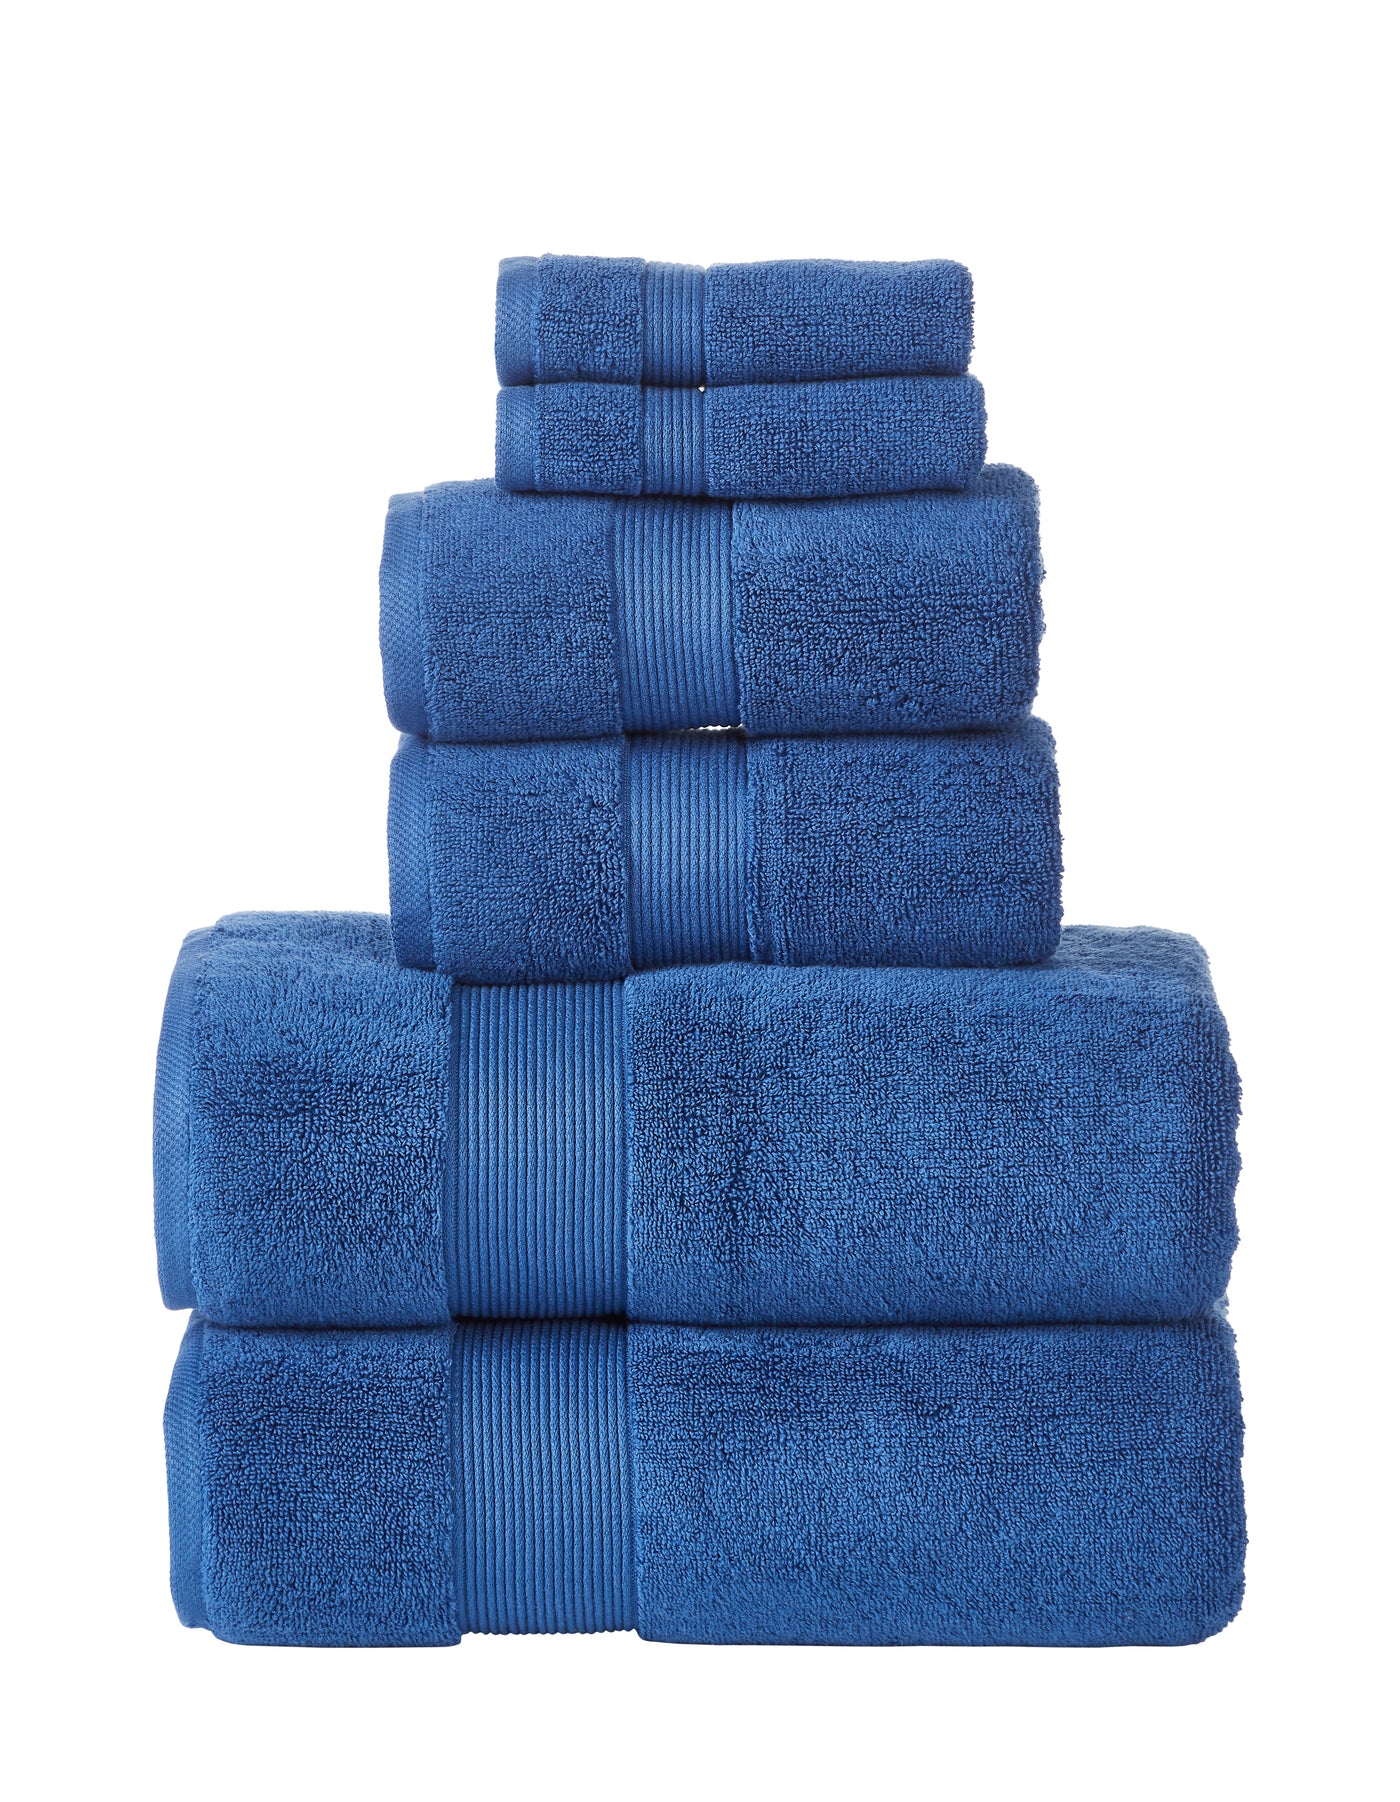 Towels: Hotel Towels Wholesale, Motels, Inns, B&Bs, Resorts